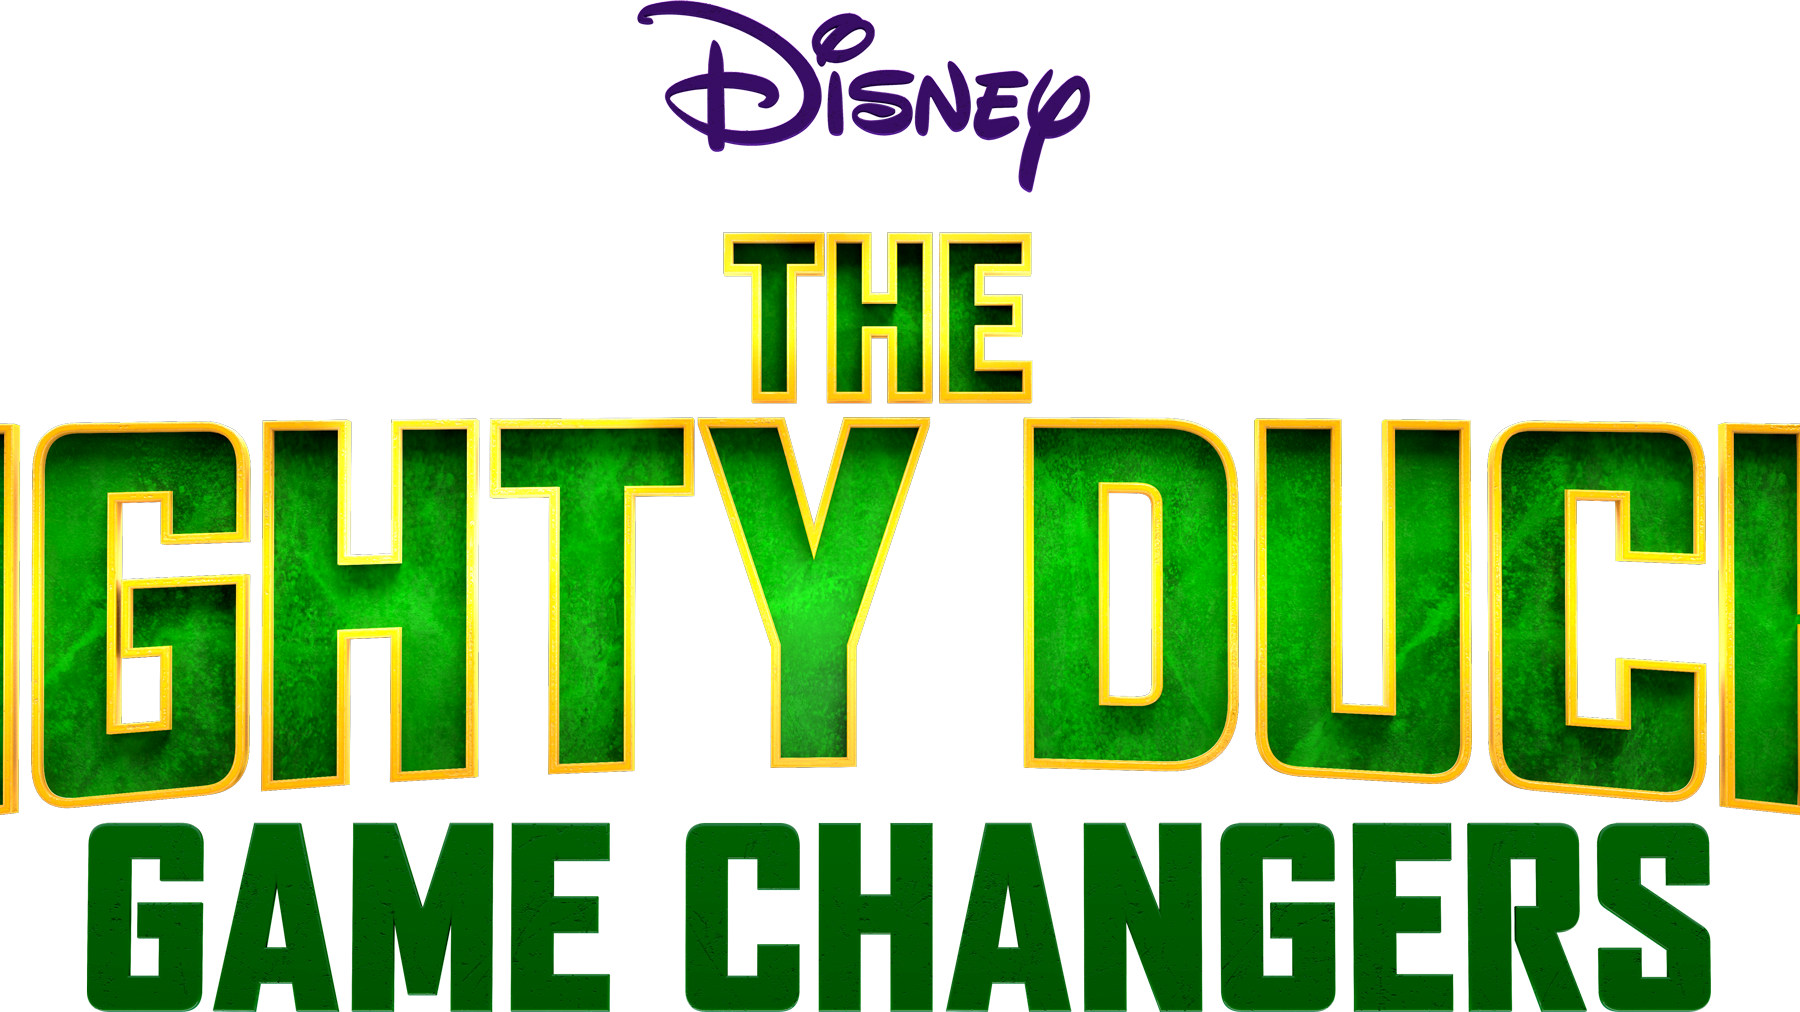 The Mighty Ducks: Game Changers Season 2